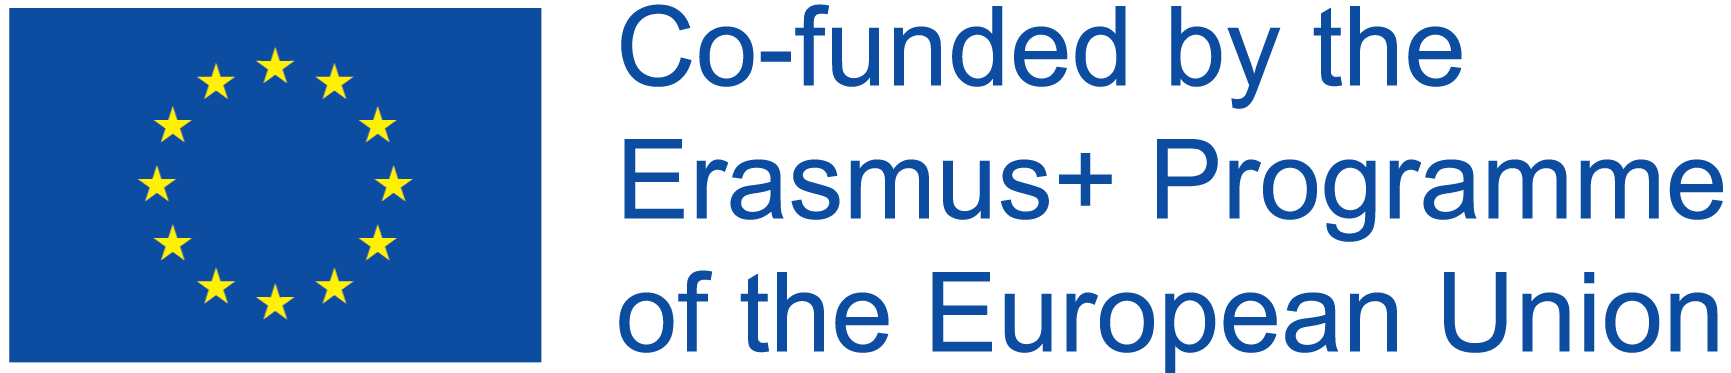 Erasmus+ Co-Funded logo